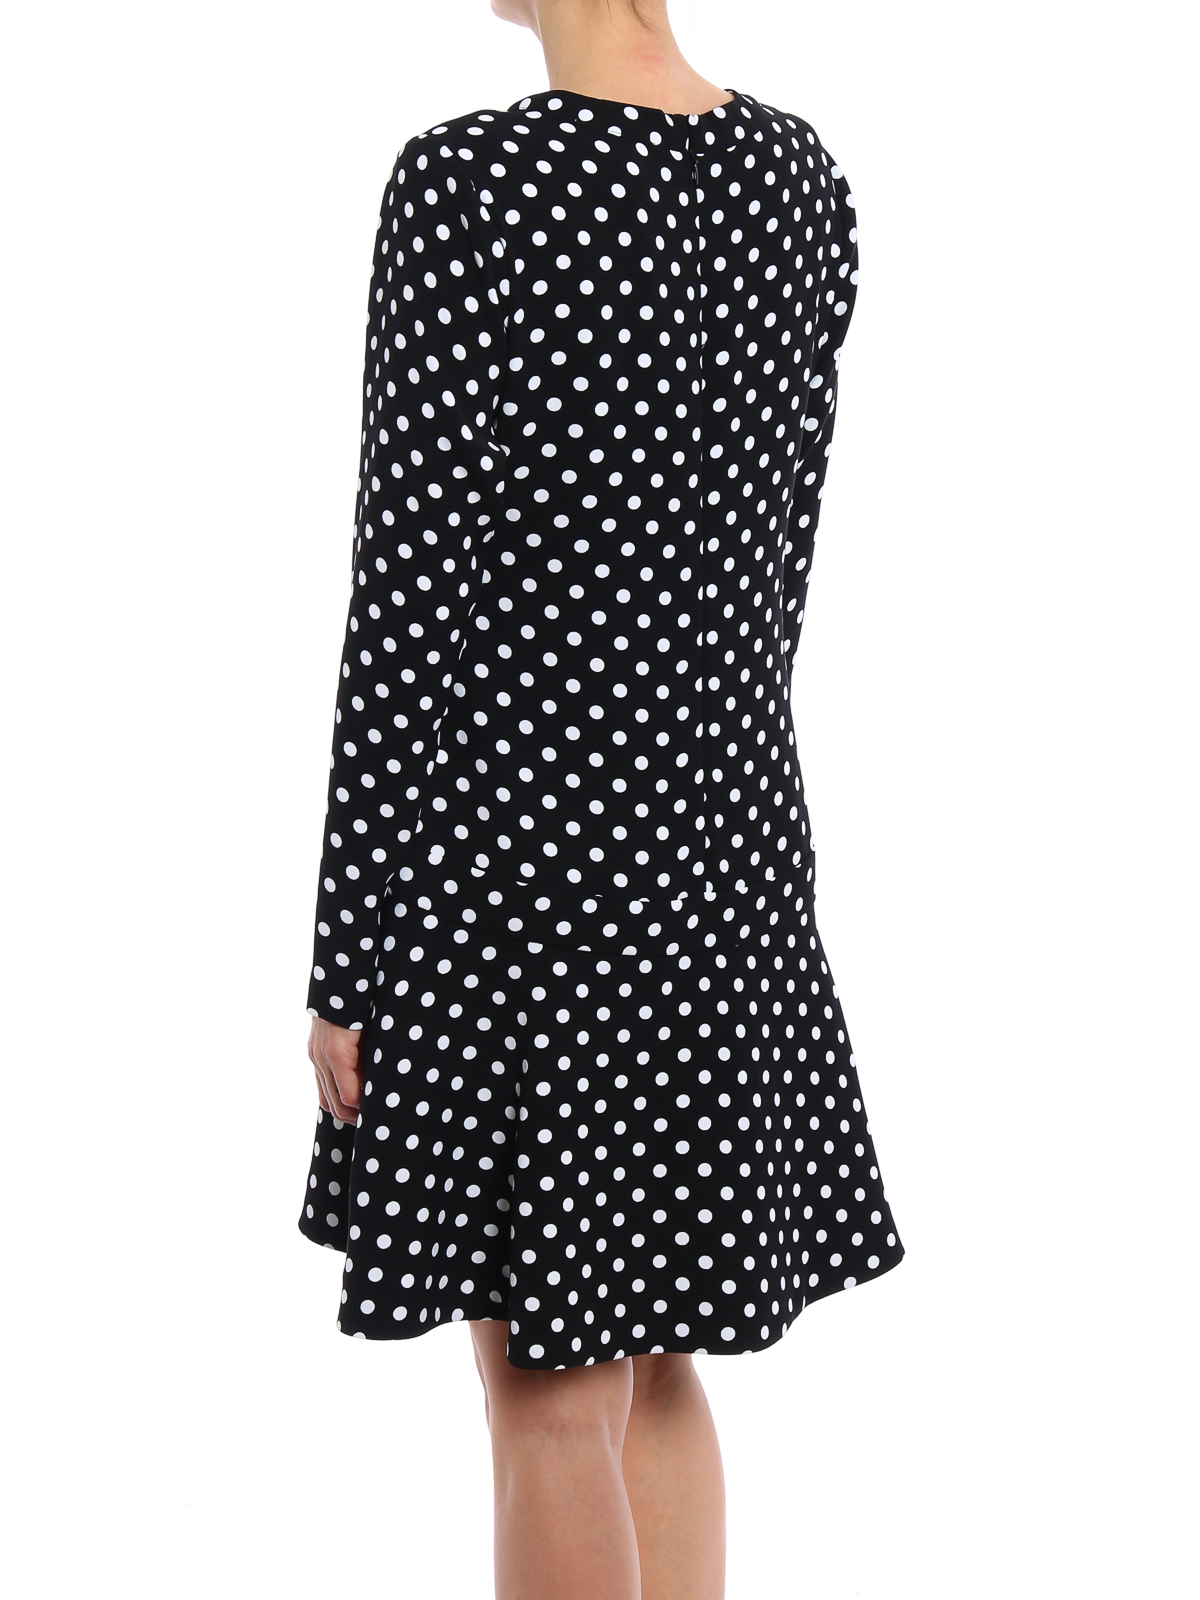 Short dresses Michael Kors - Flounced polka dot dress - MS78VLB6GY001